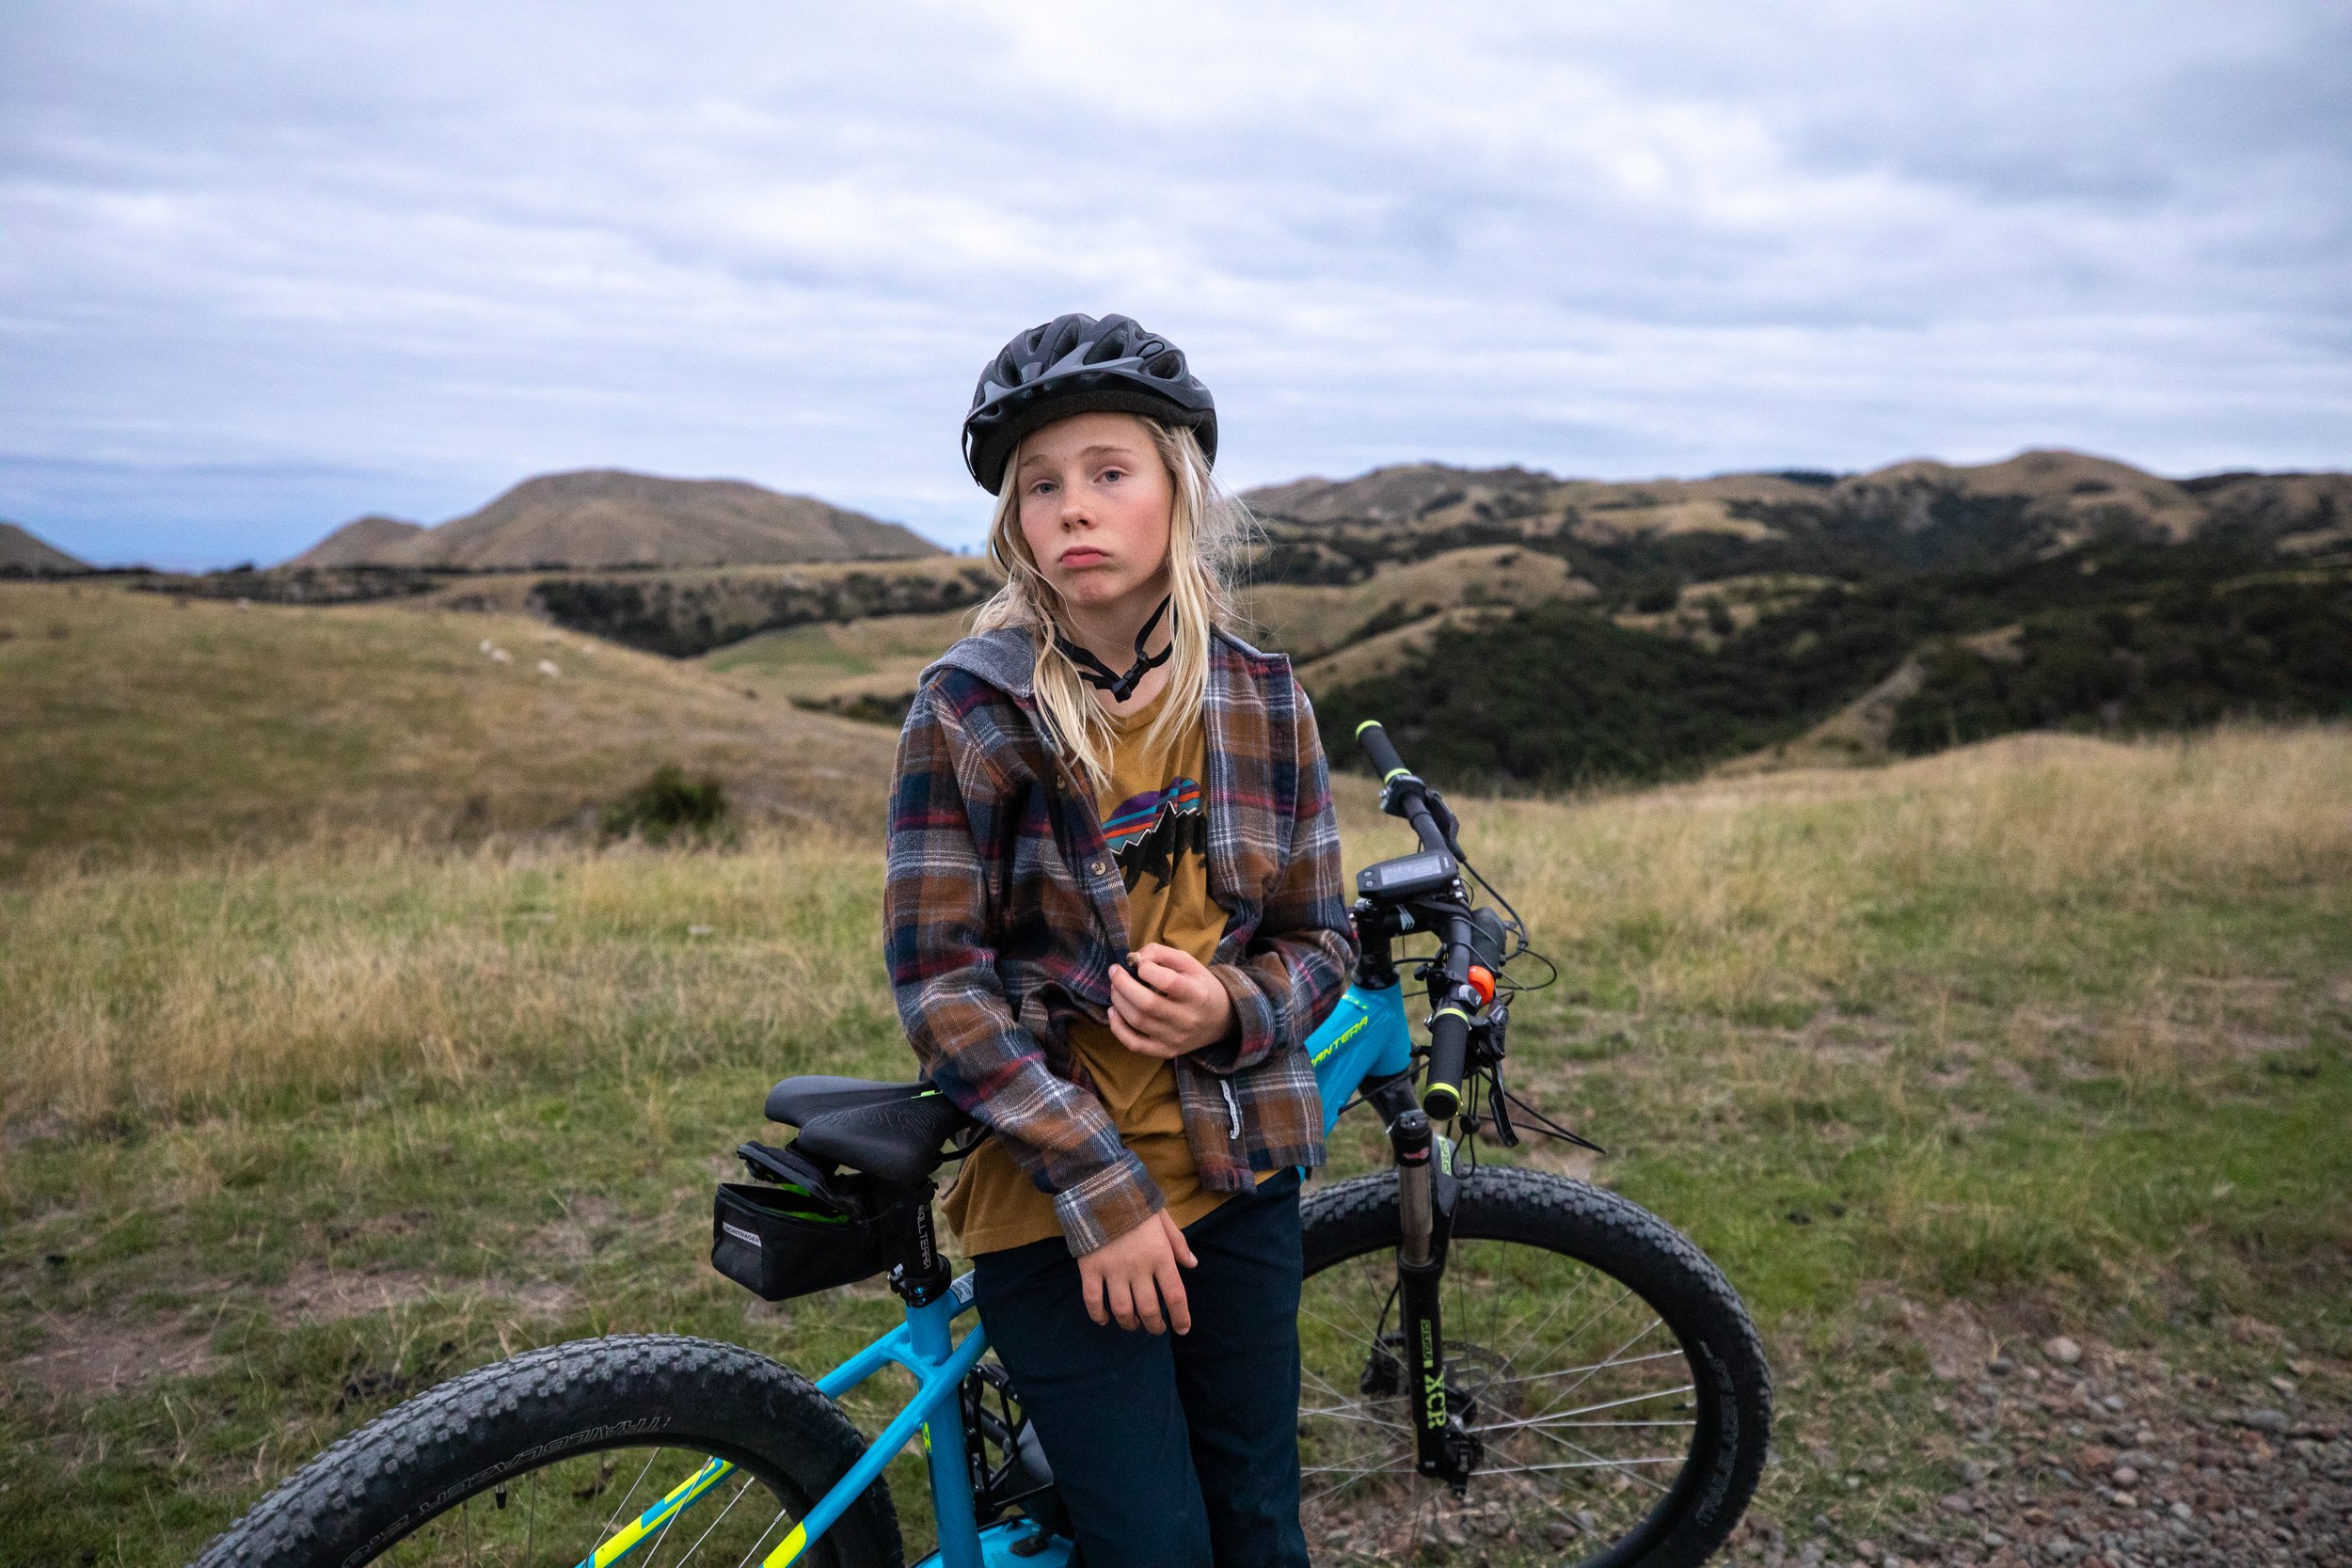   Hawkes Bay, New Zealand, 2019 -  Mountain biking along the coast in Northern New Zealand.  